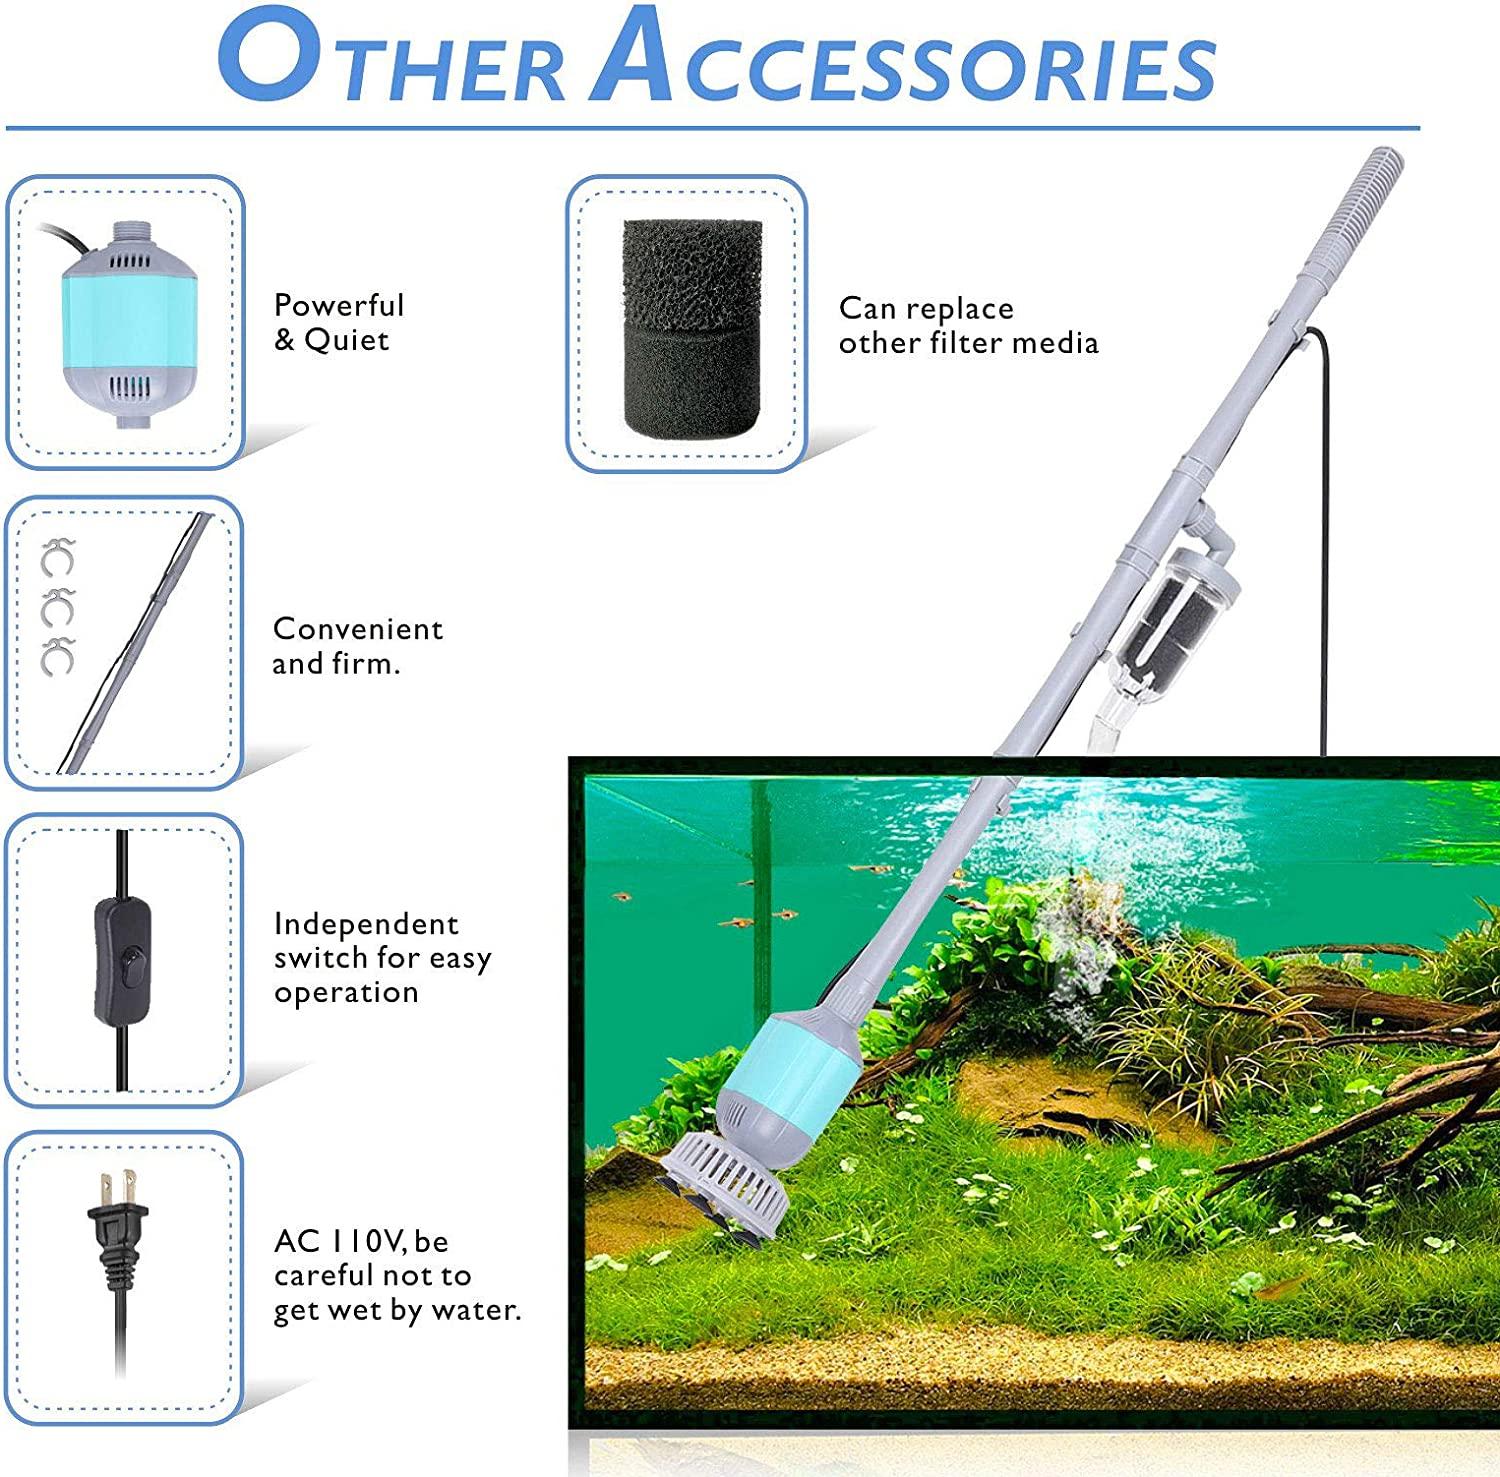 hygger Aquarium Electric Cleaning Brush - hygger